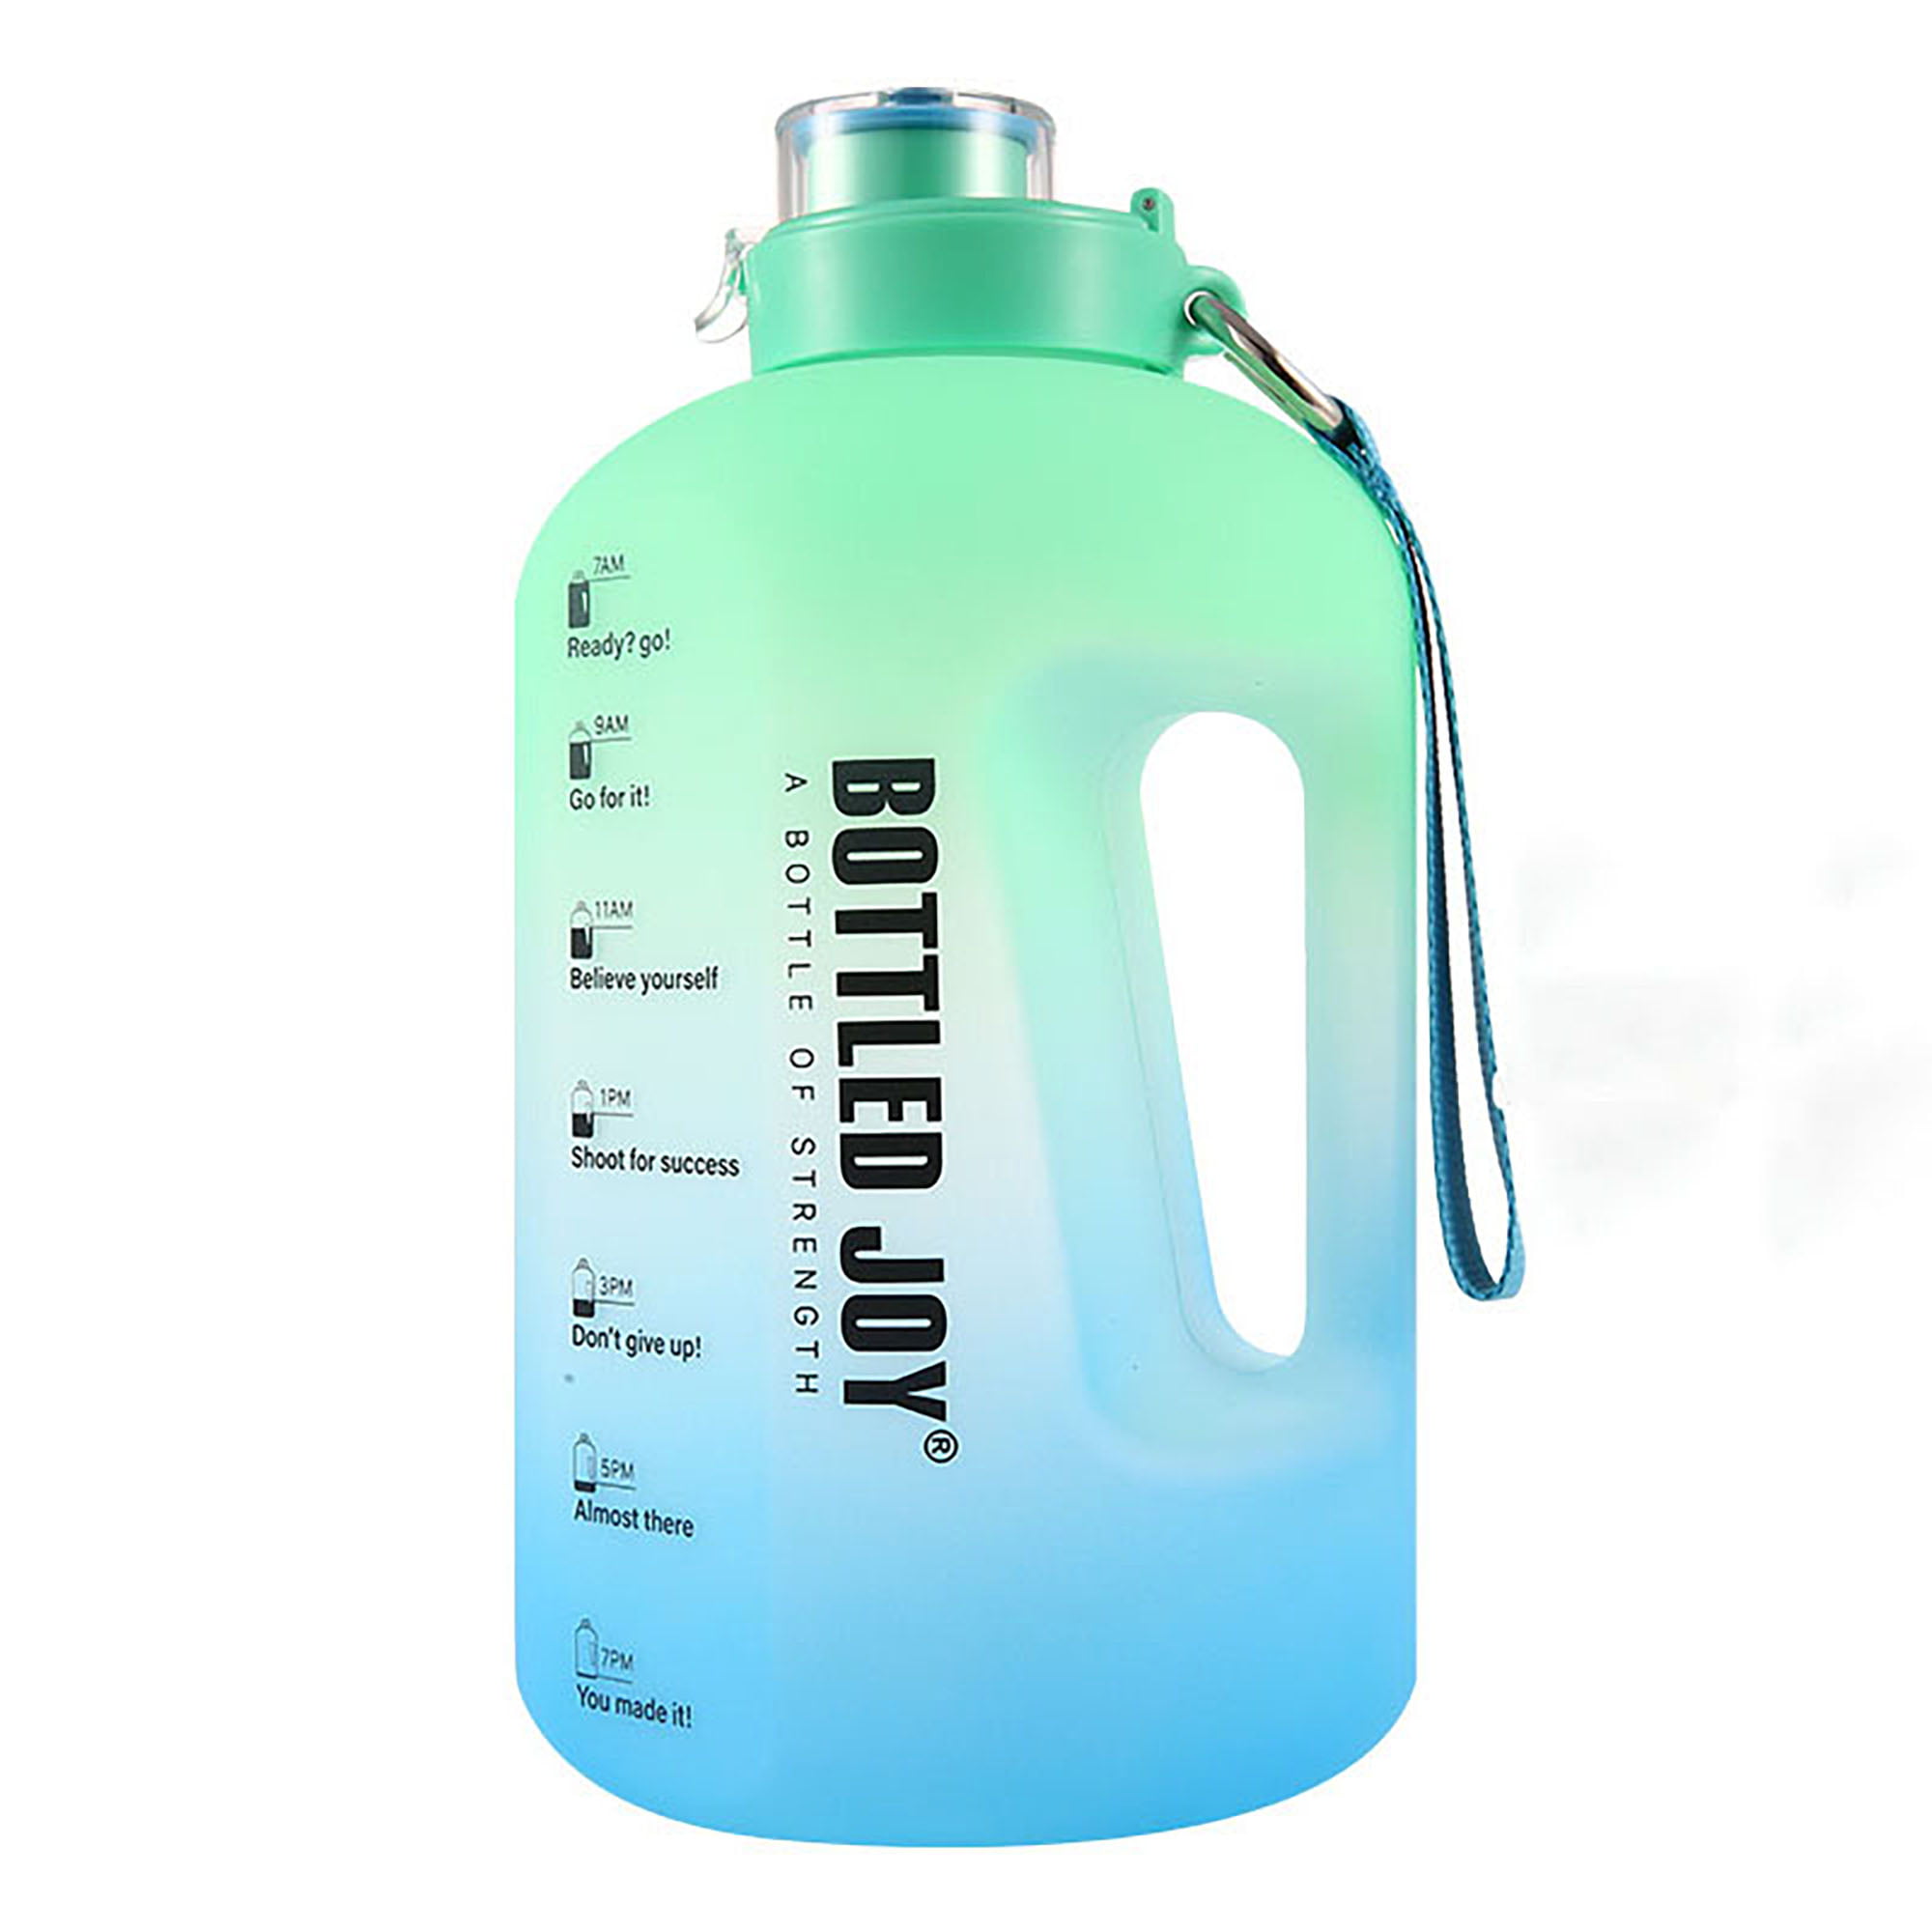 2.5L Large Water Bottle Ecofriendly Reusable Water Bottle For Men